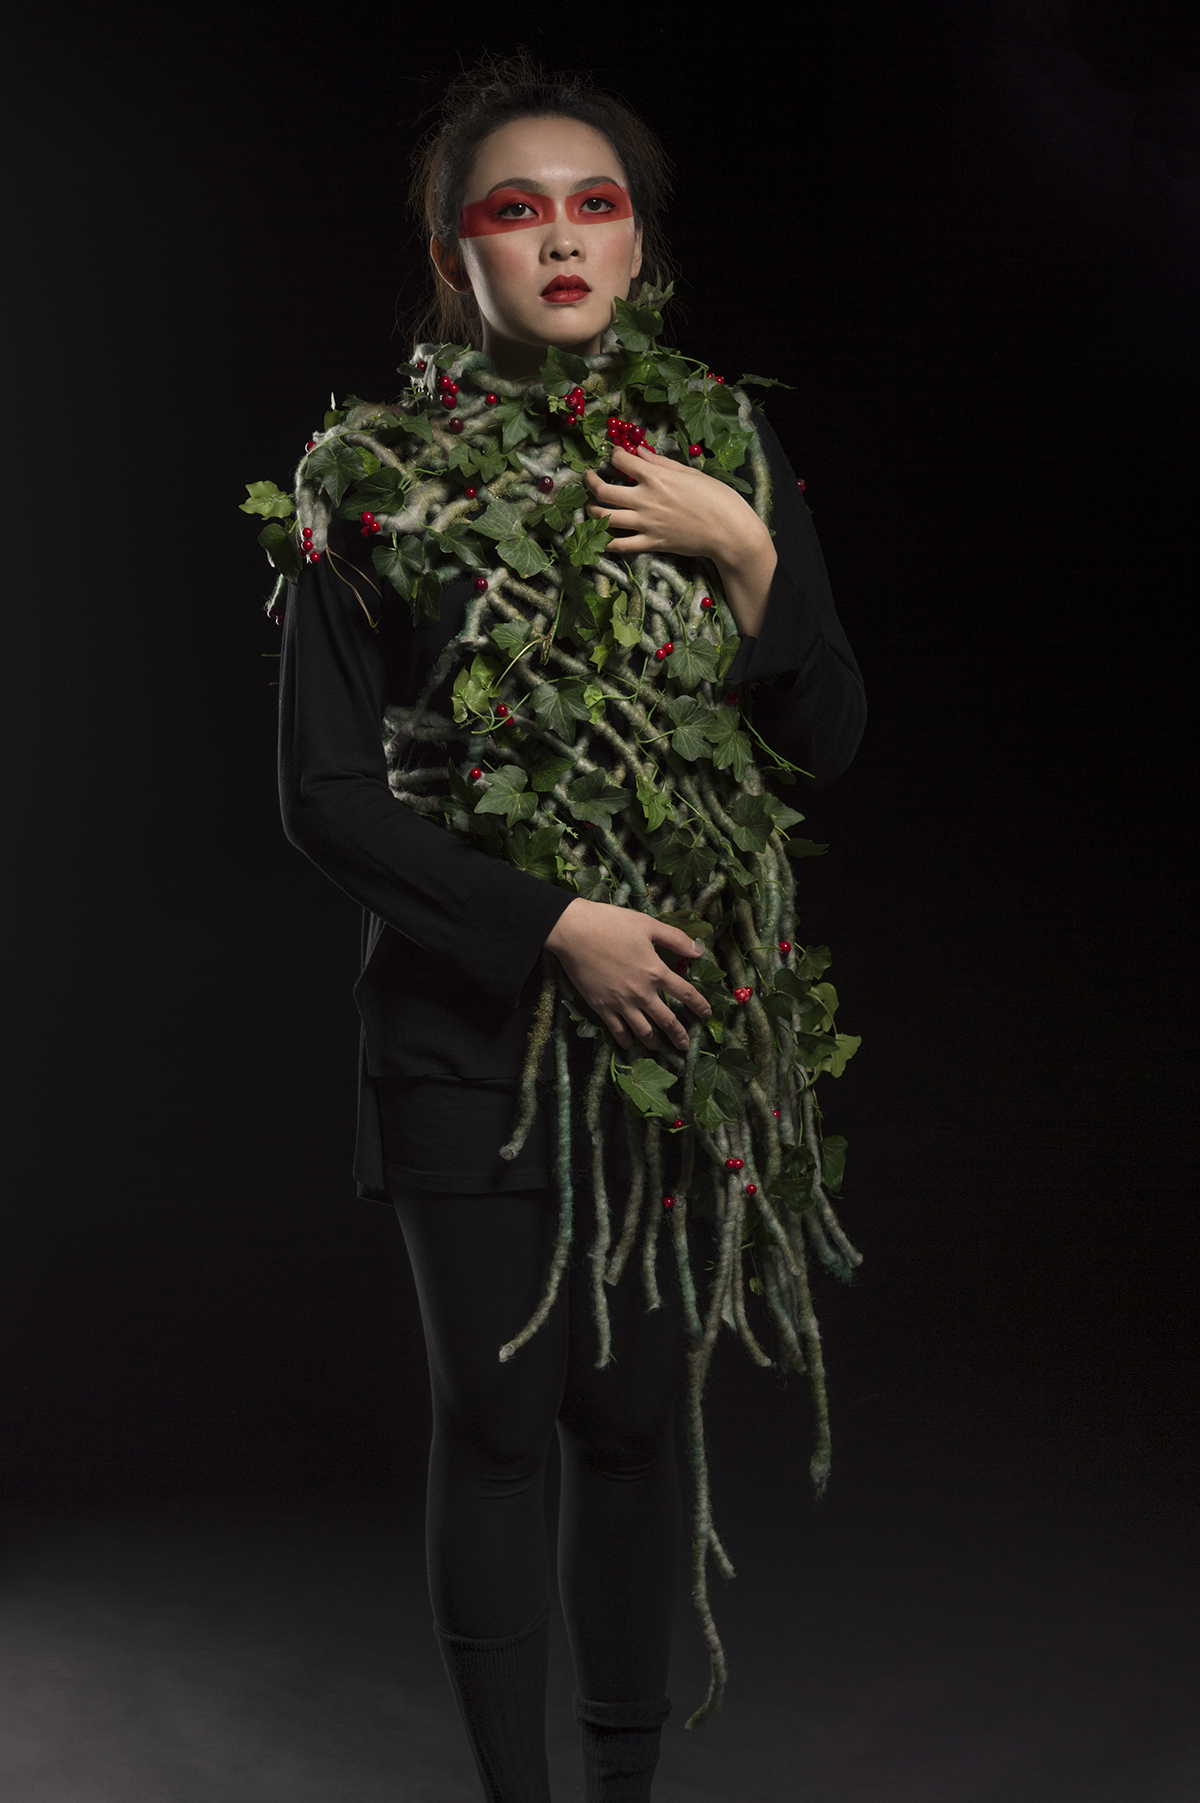 Vegetation-inspired wearable sculpture